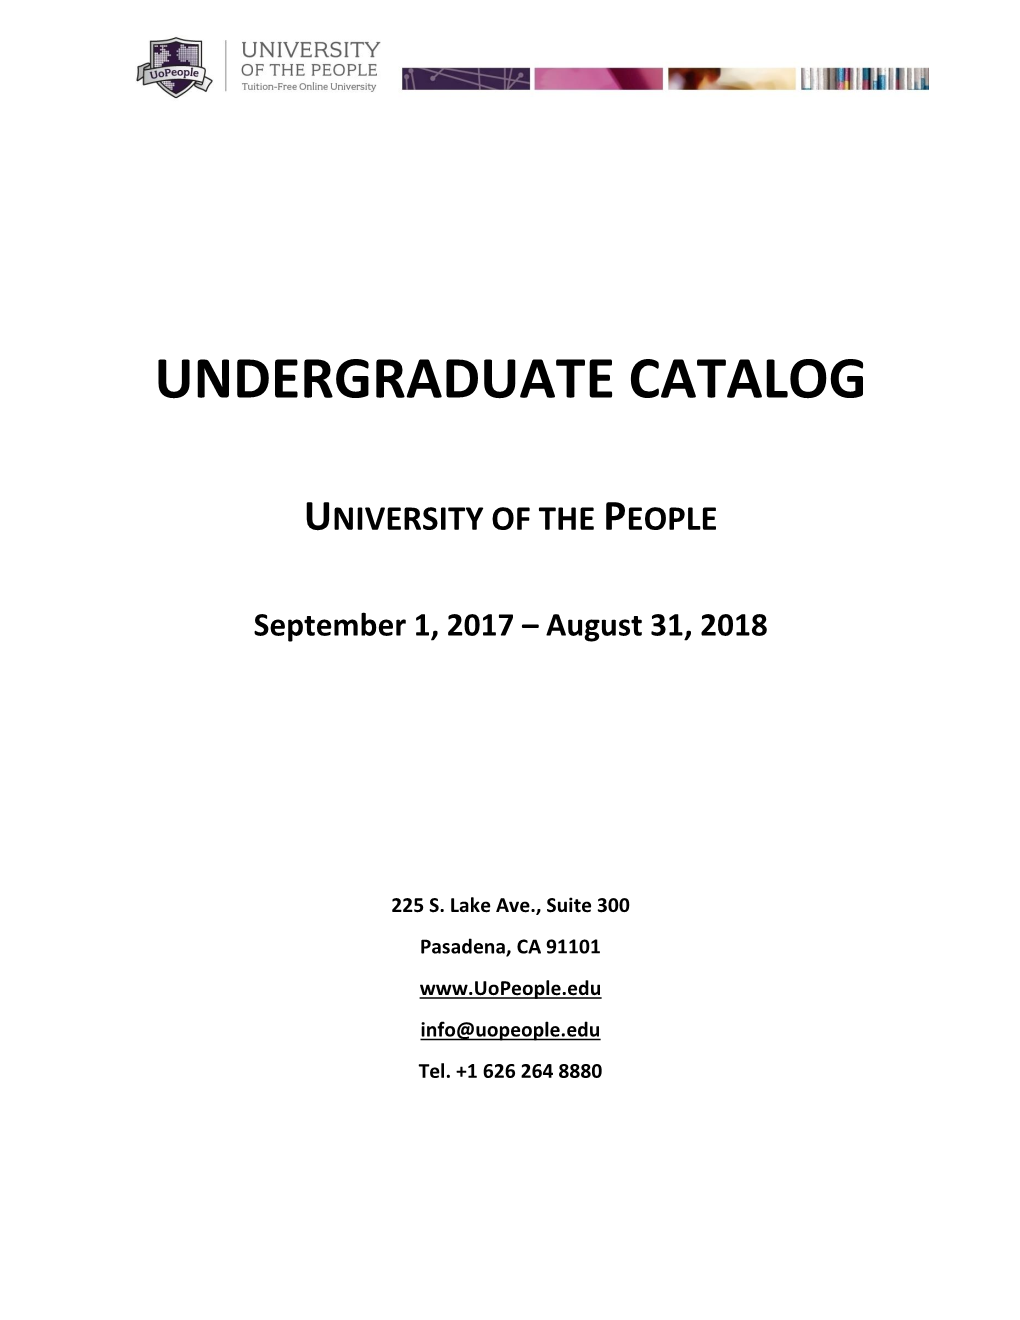 Undergraduate Catalog University of the People